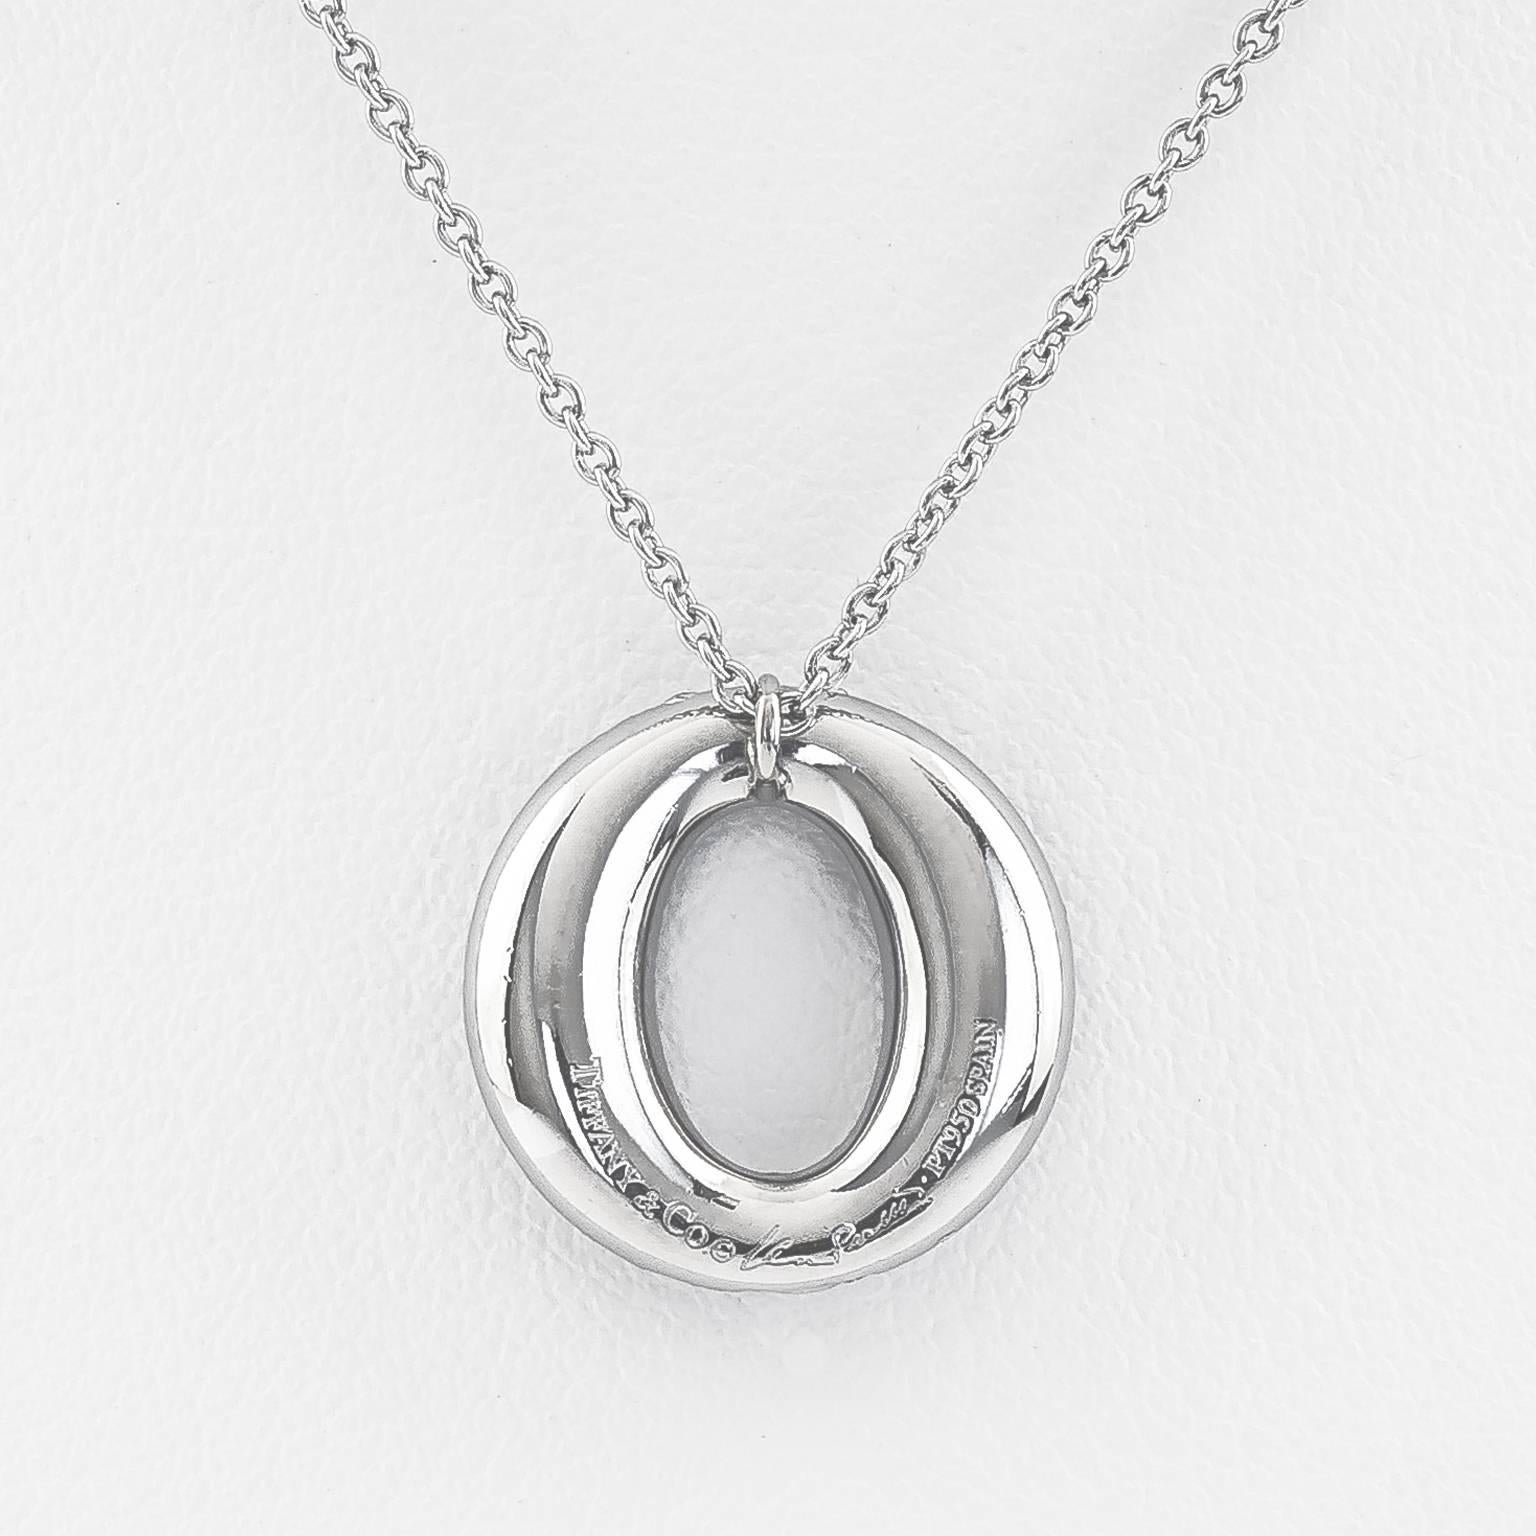 Elsa Peretti’s iconic elliptical form pendant of pavé diamonds set in platinum hangs from a 16 in Platinum chain.
Pendant 55 dia. 0.75 cttw Diamonds F-G VS
Marked: Tiffany & Co. Elsa Peretti PT 950 Spain.